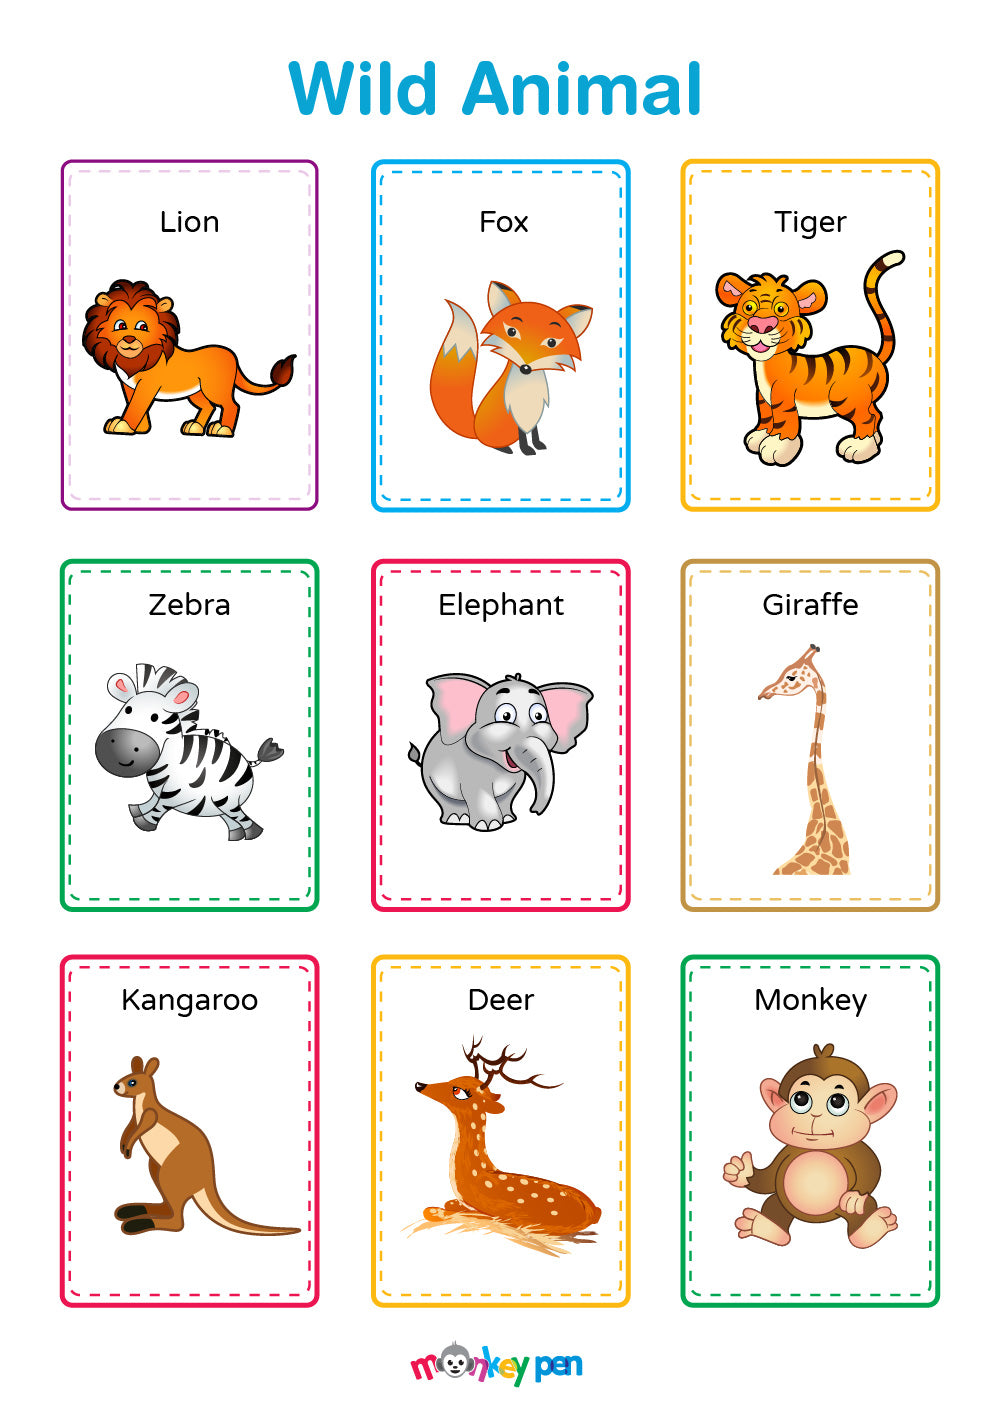 wild-animals-chart-animals-wild-animals-and-their-homes-zoo-animals